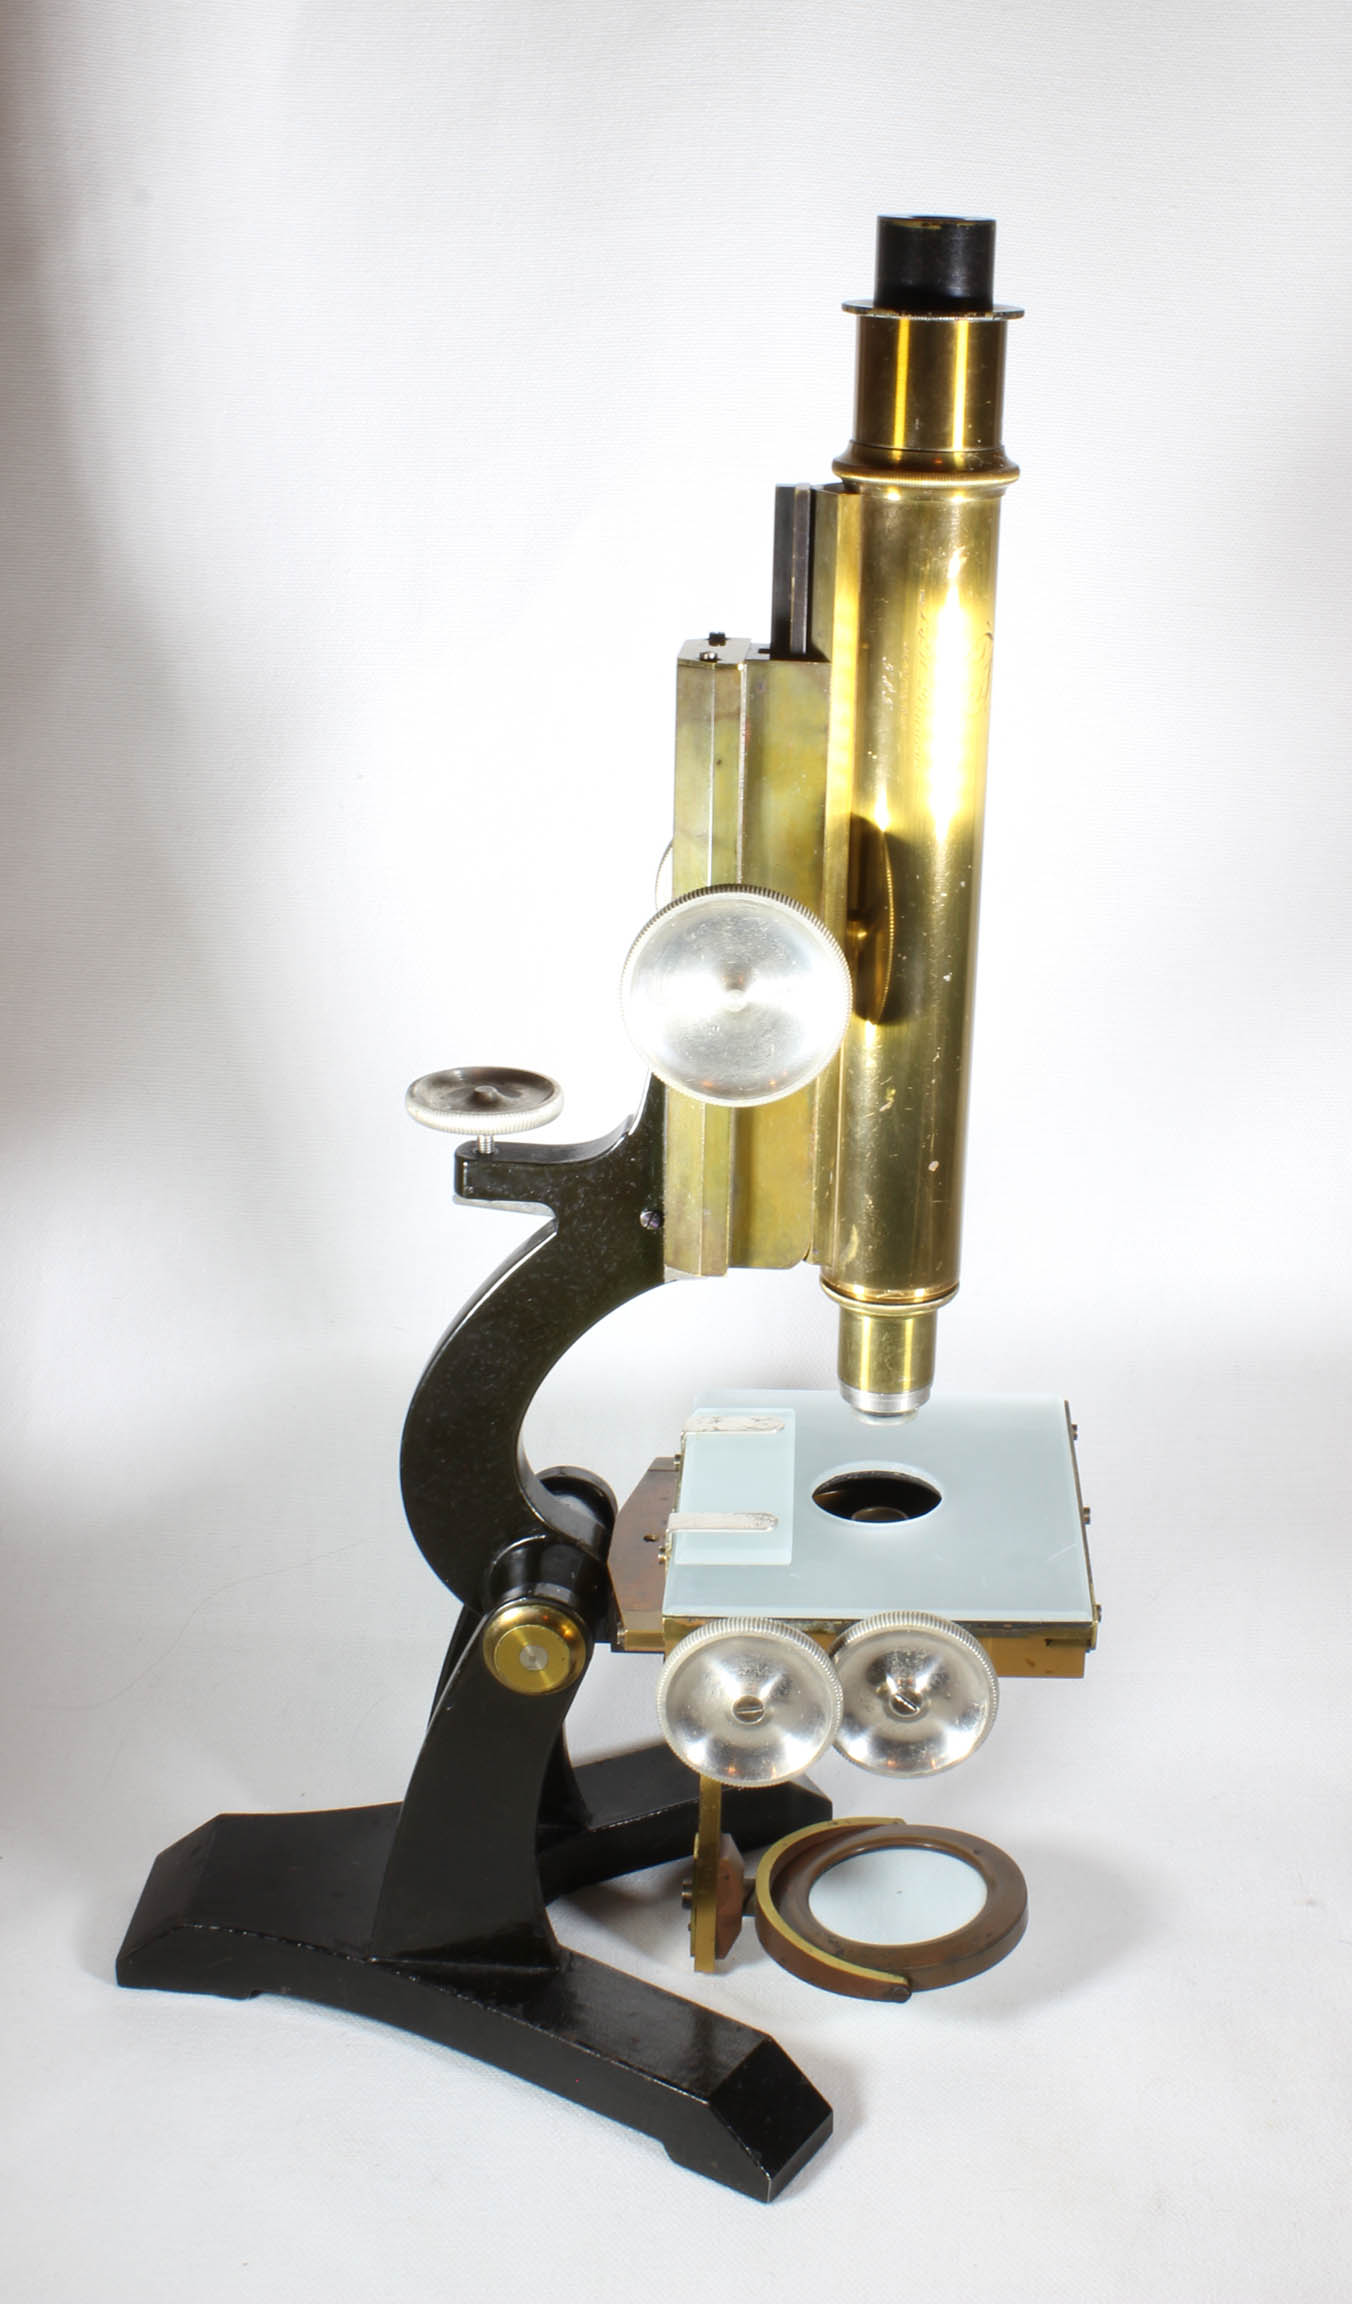 Grunow Medium sized Microscope Front View